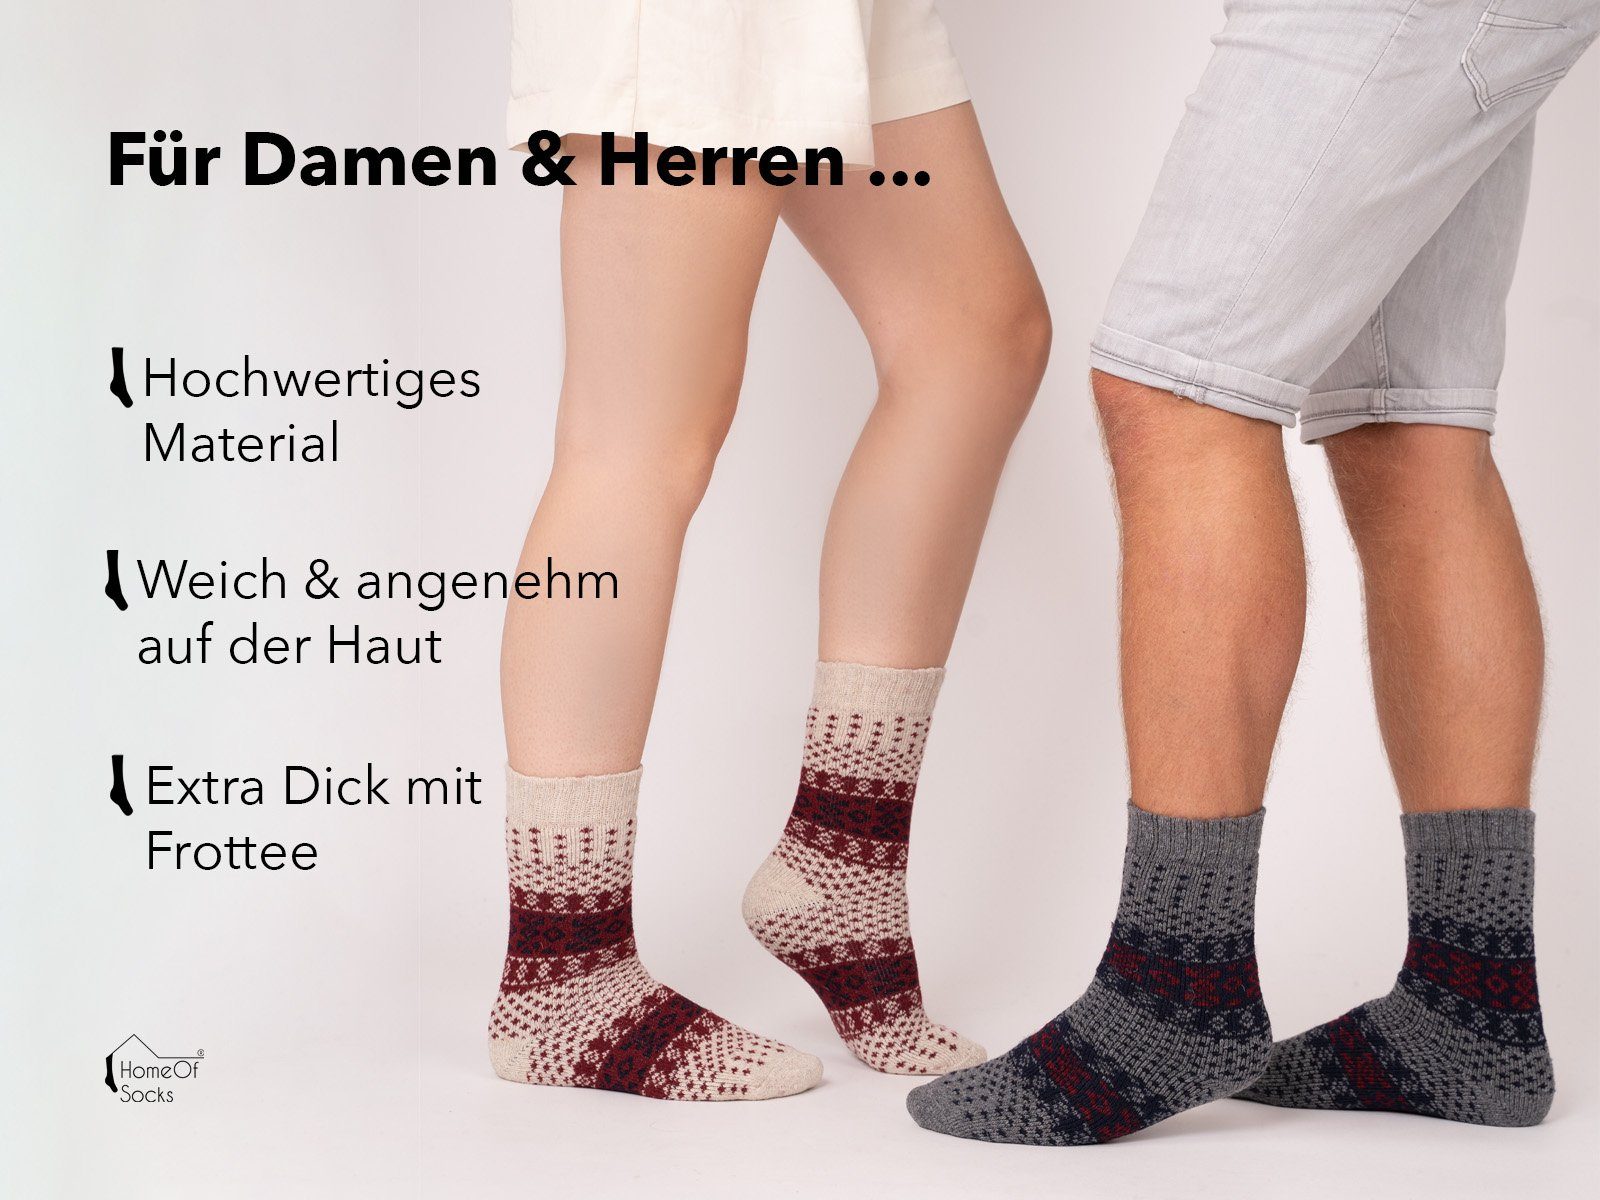 HomeOfSocks Socken Hygge Warm Damen Herren Socken Mit Dick & Dicke Hohem Grau Wollanteil 45% Bunten Hyggelig Für In Socken Wolle mit Design